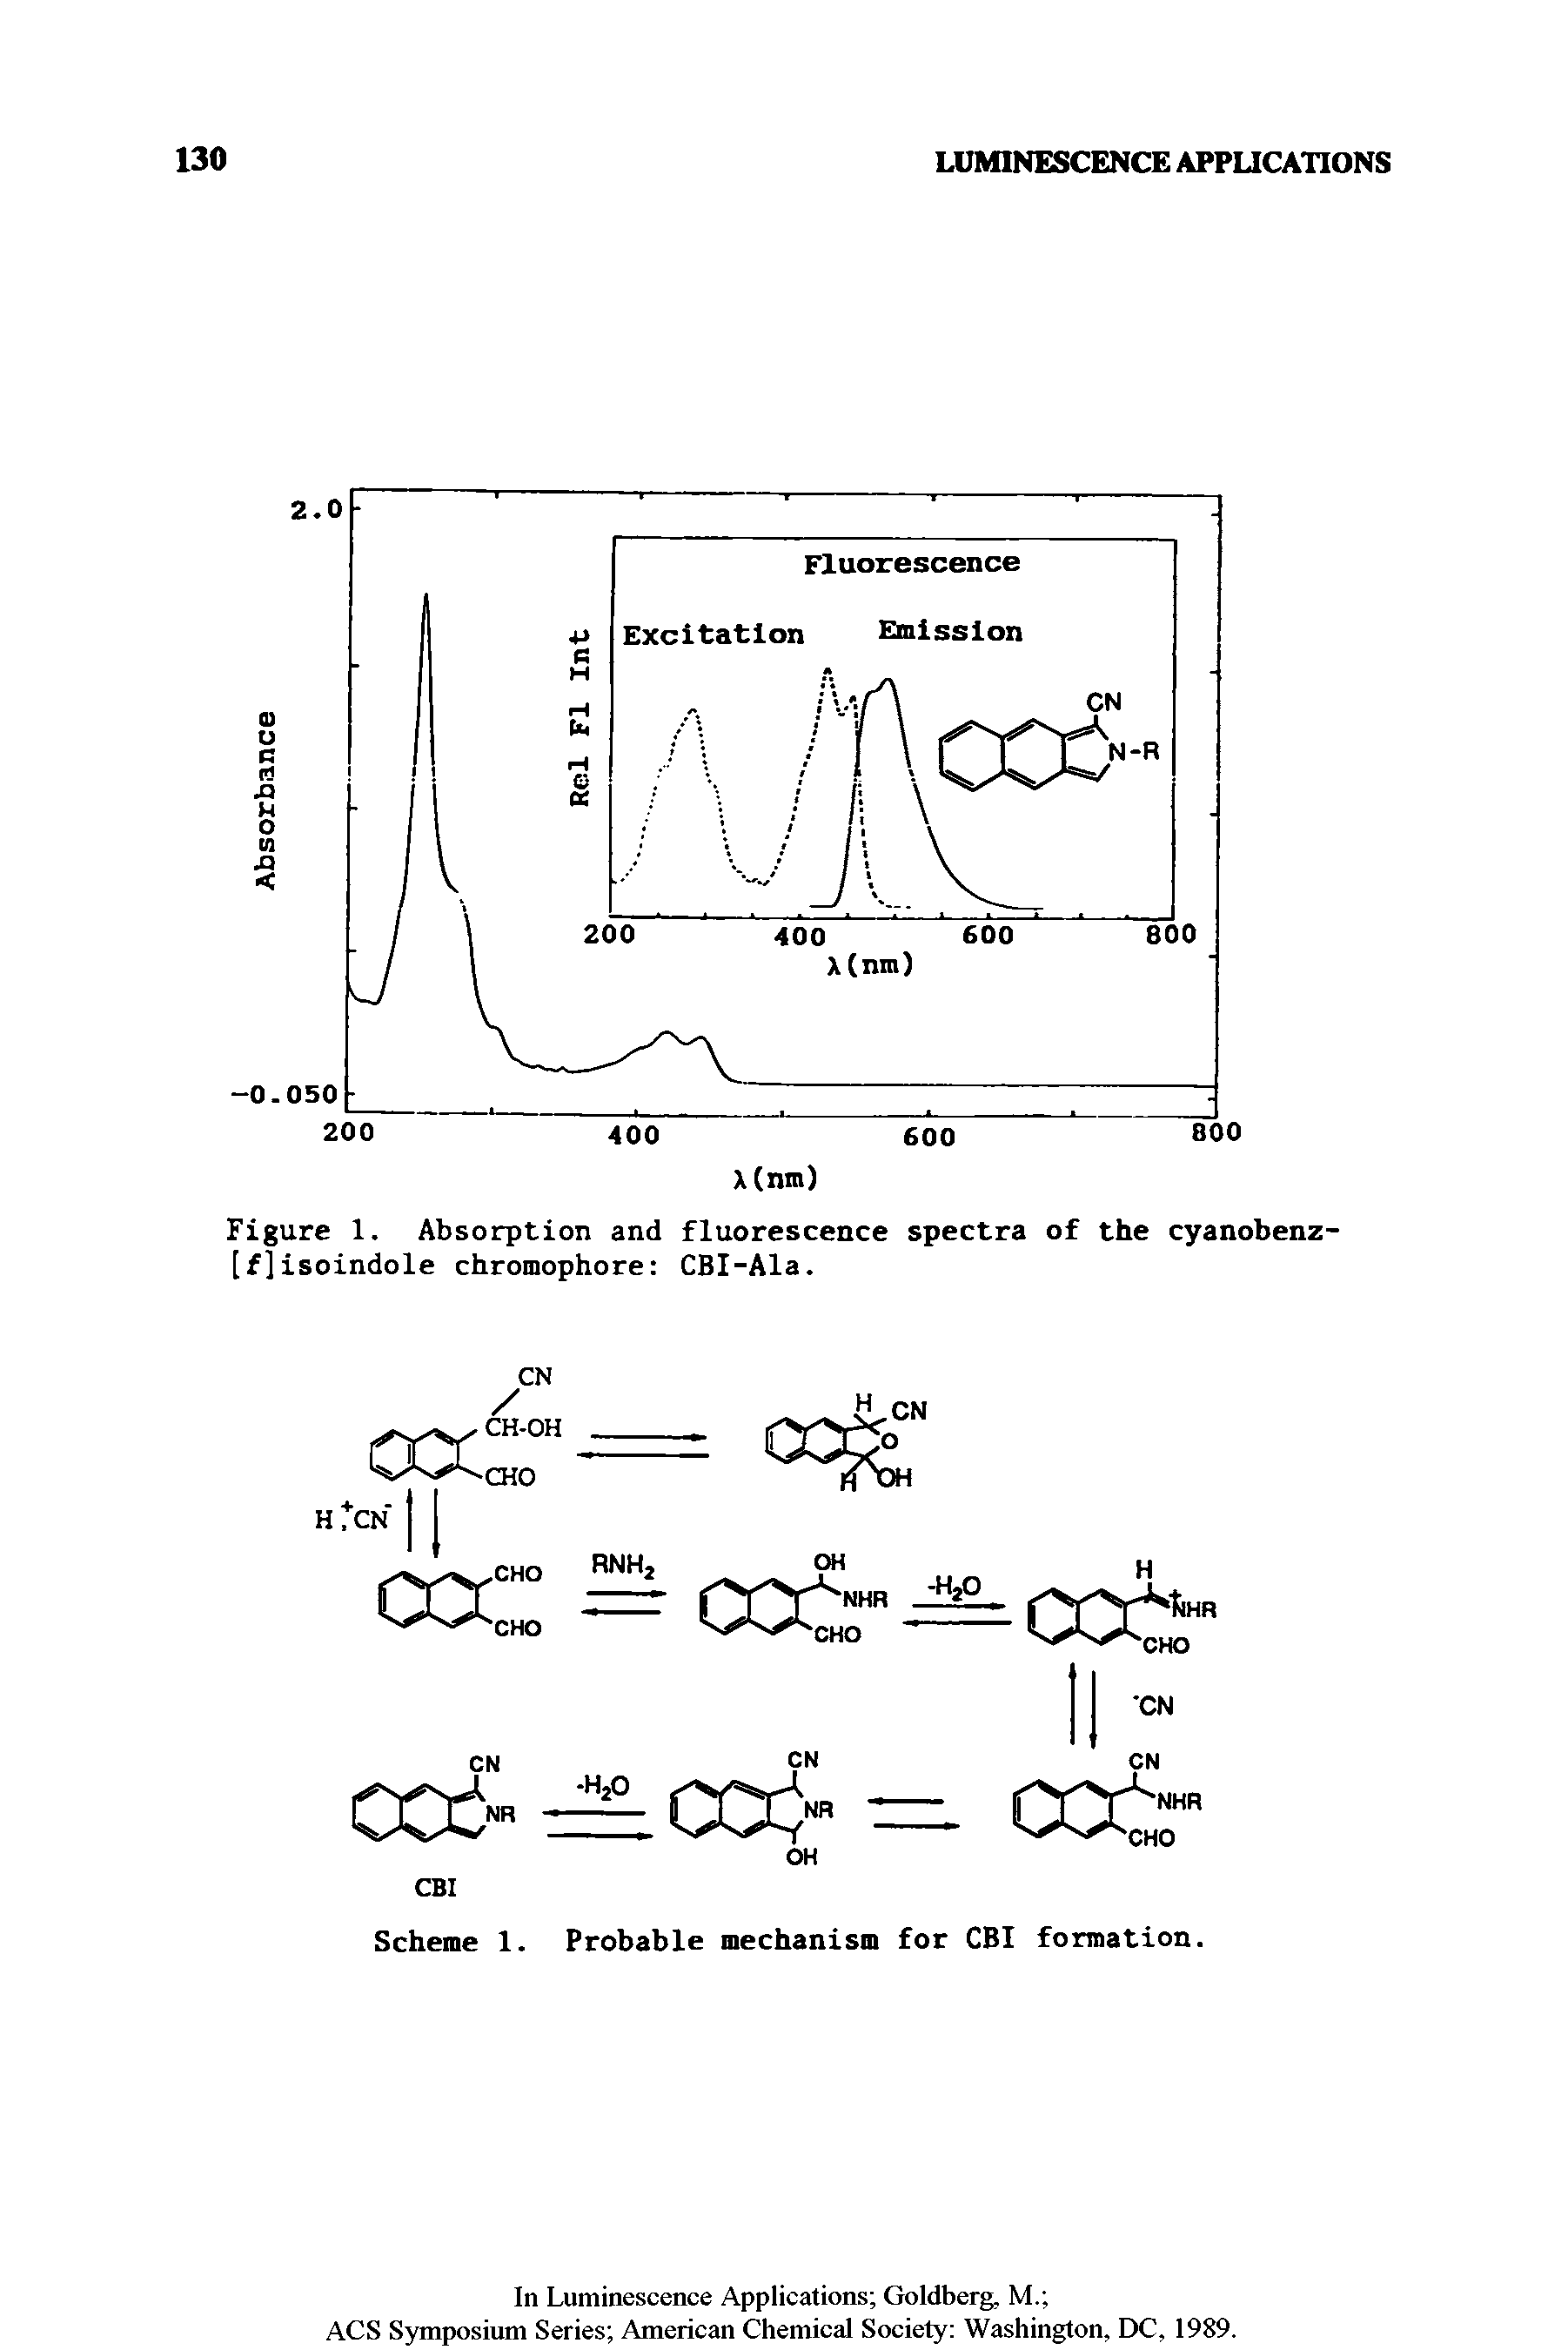 Figure 1. Absorption and fluorescence spectra of the cyanobenz-[f]isoindole chromophore CBI-Ala.